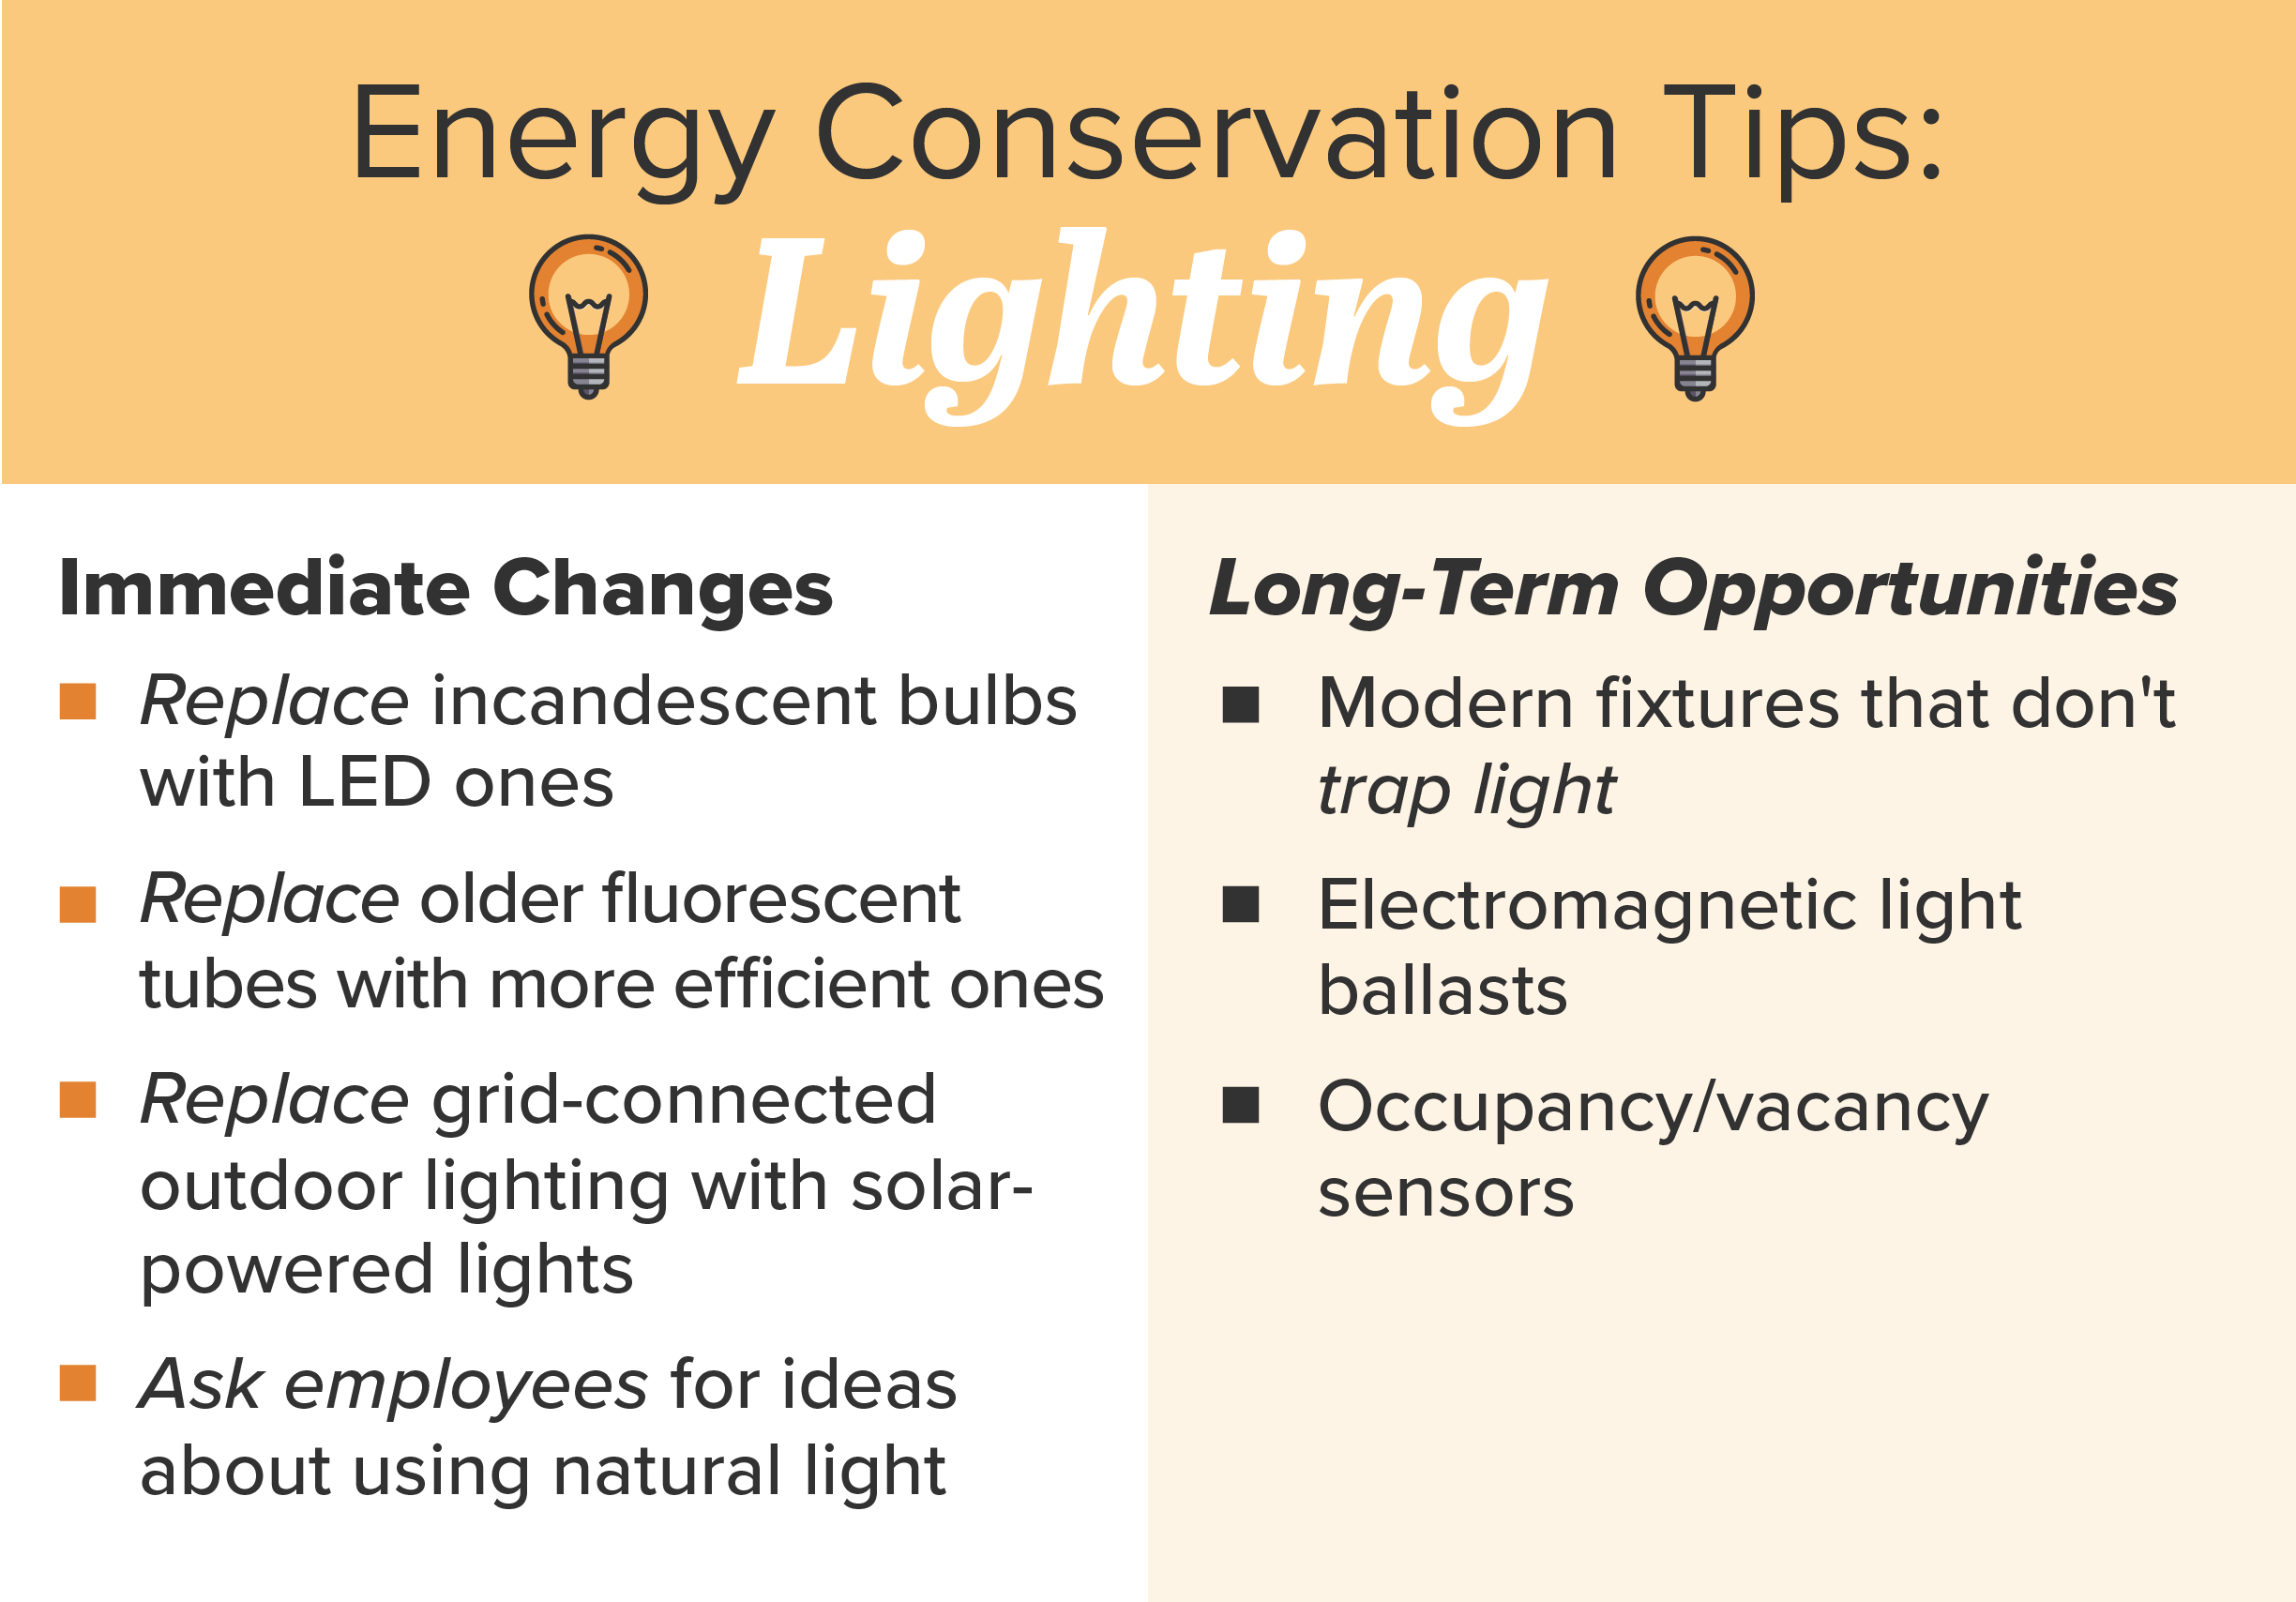 Energy conservation ideas